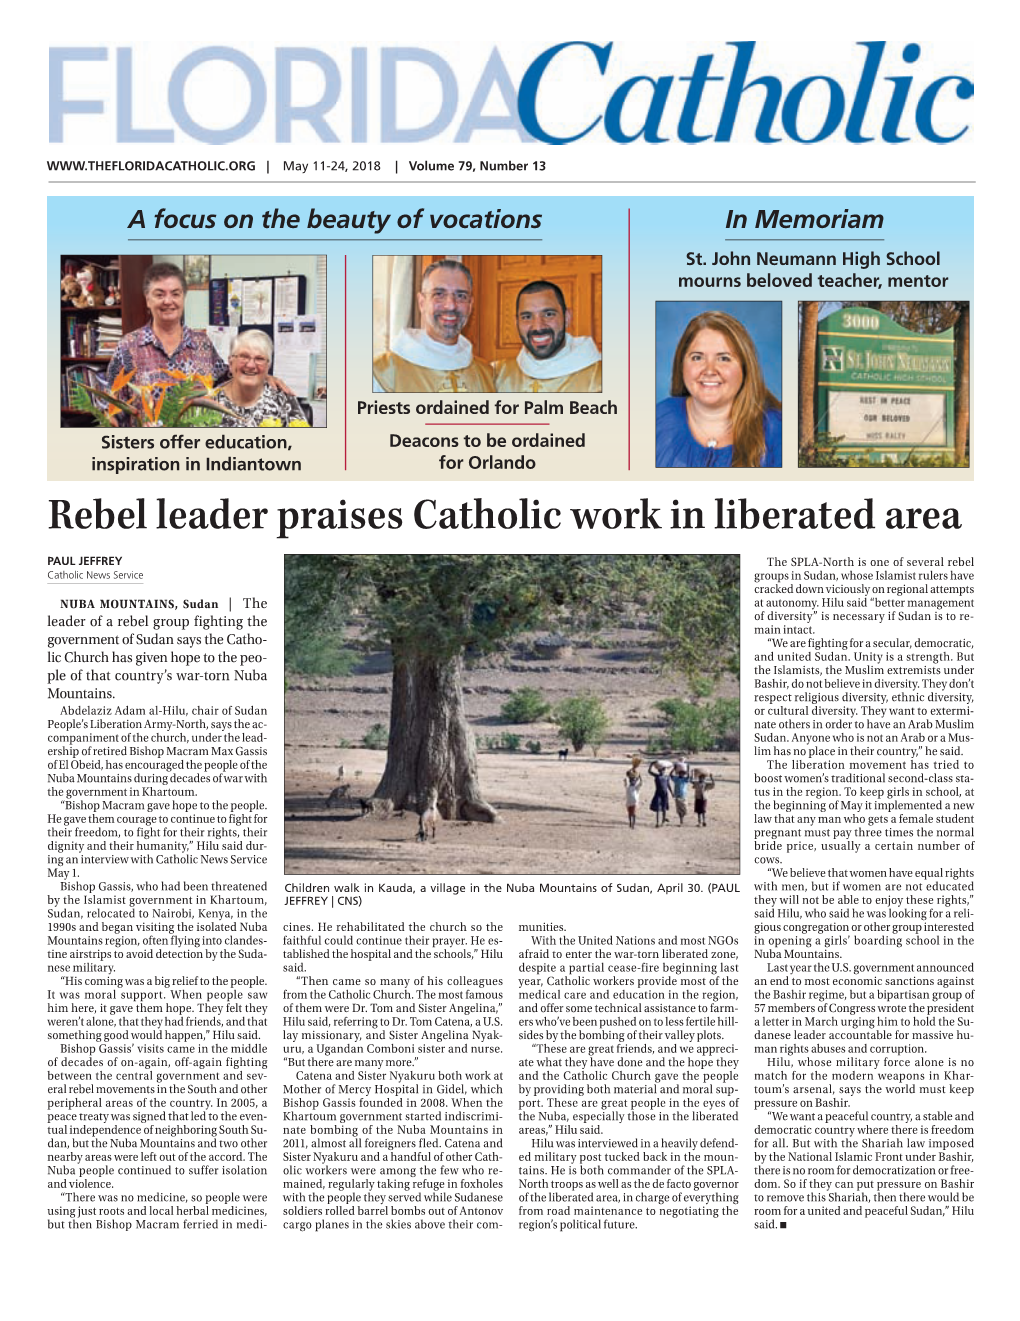 Rebel Leader Praises Catholic Work in Liberated Area